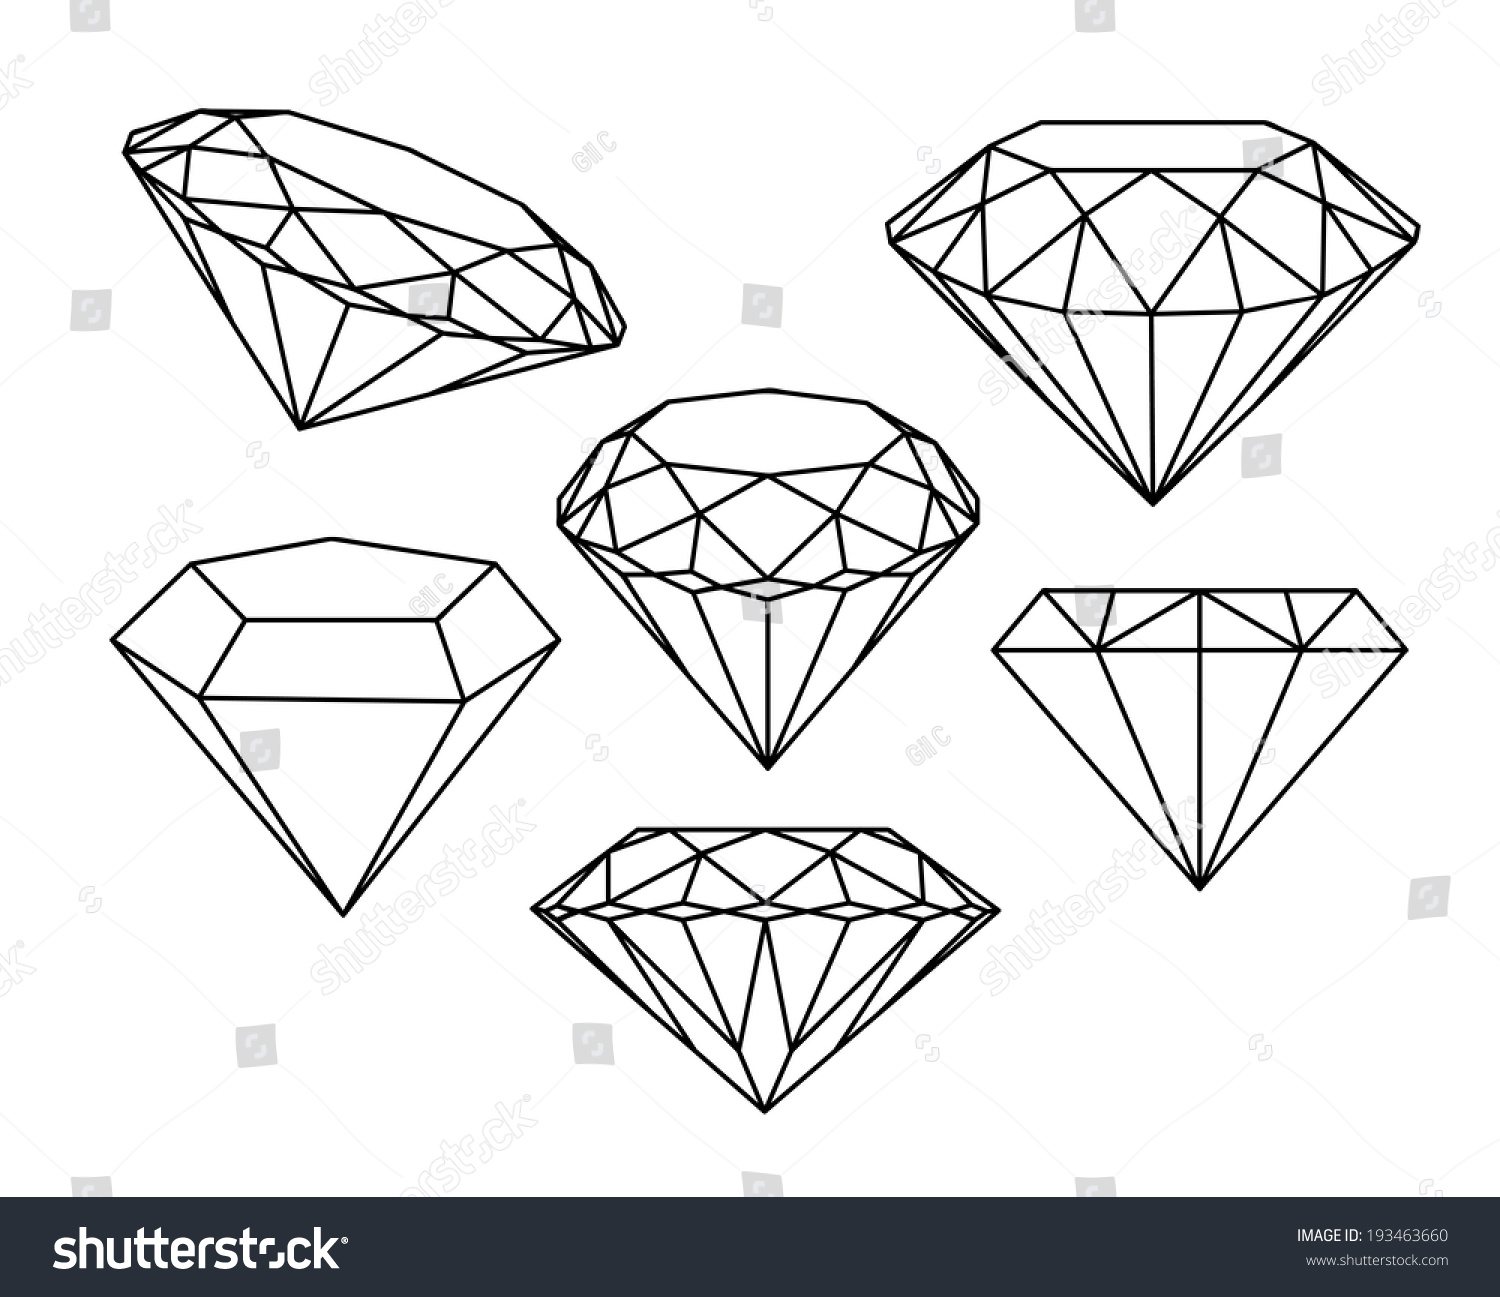 Set Of Diamonds Icons. Vector Illustration. - 193463660 : Shutterstock